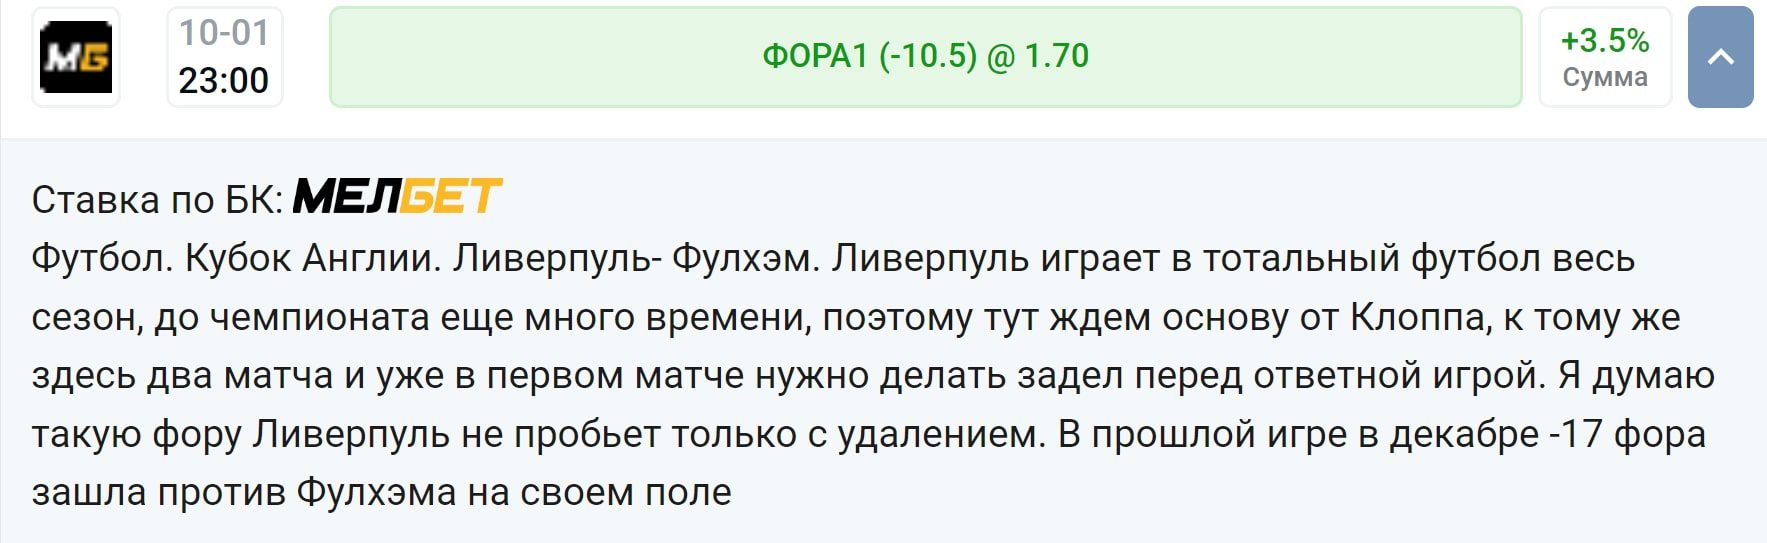 Никита Ладыгаев прогноз